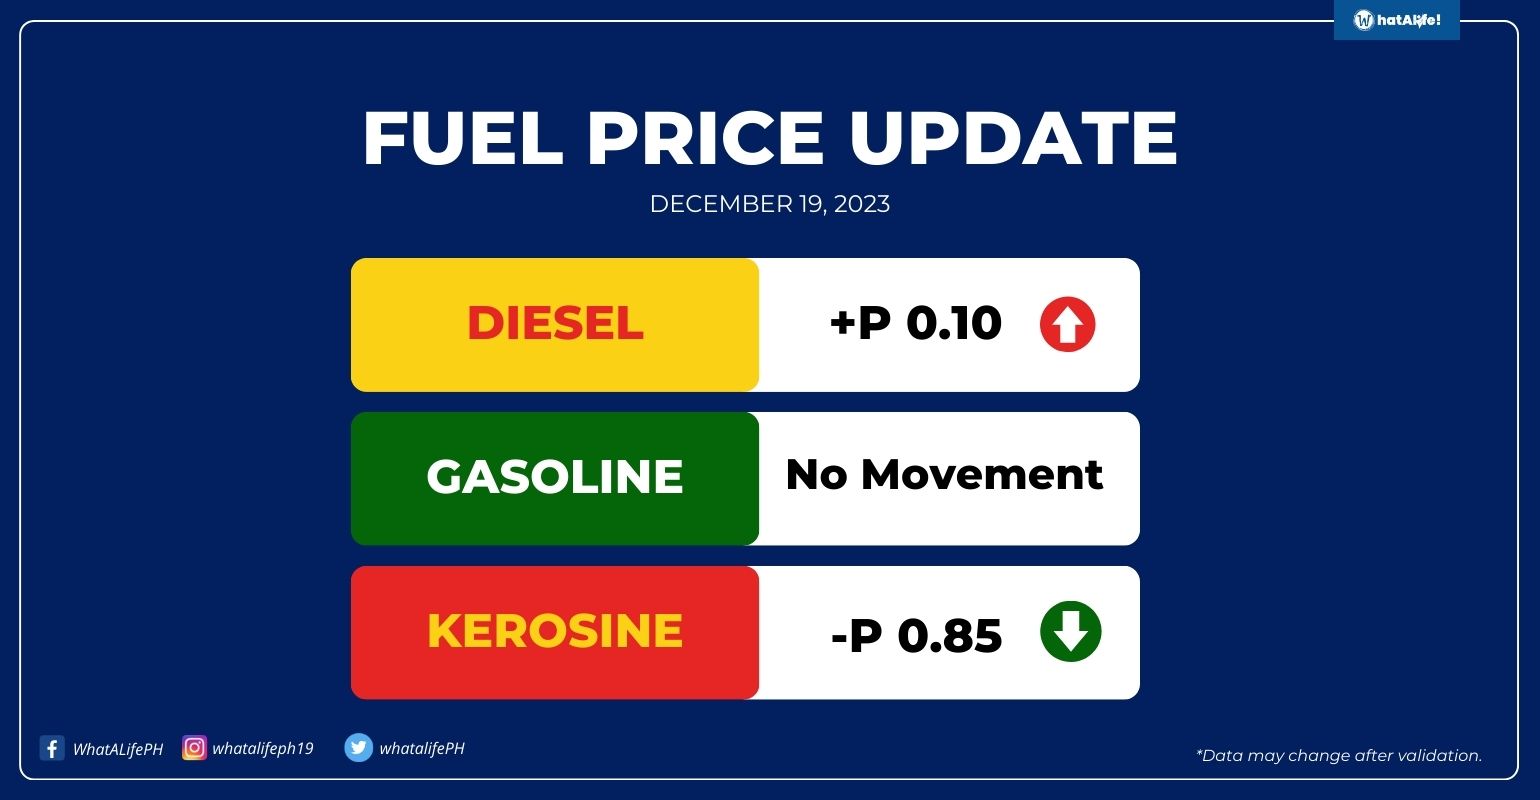 Fuel prices effective December 19, 2023